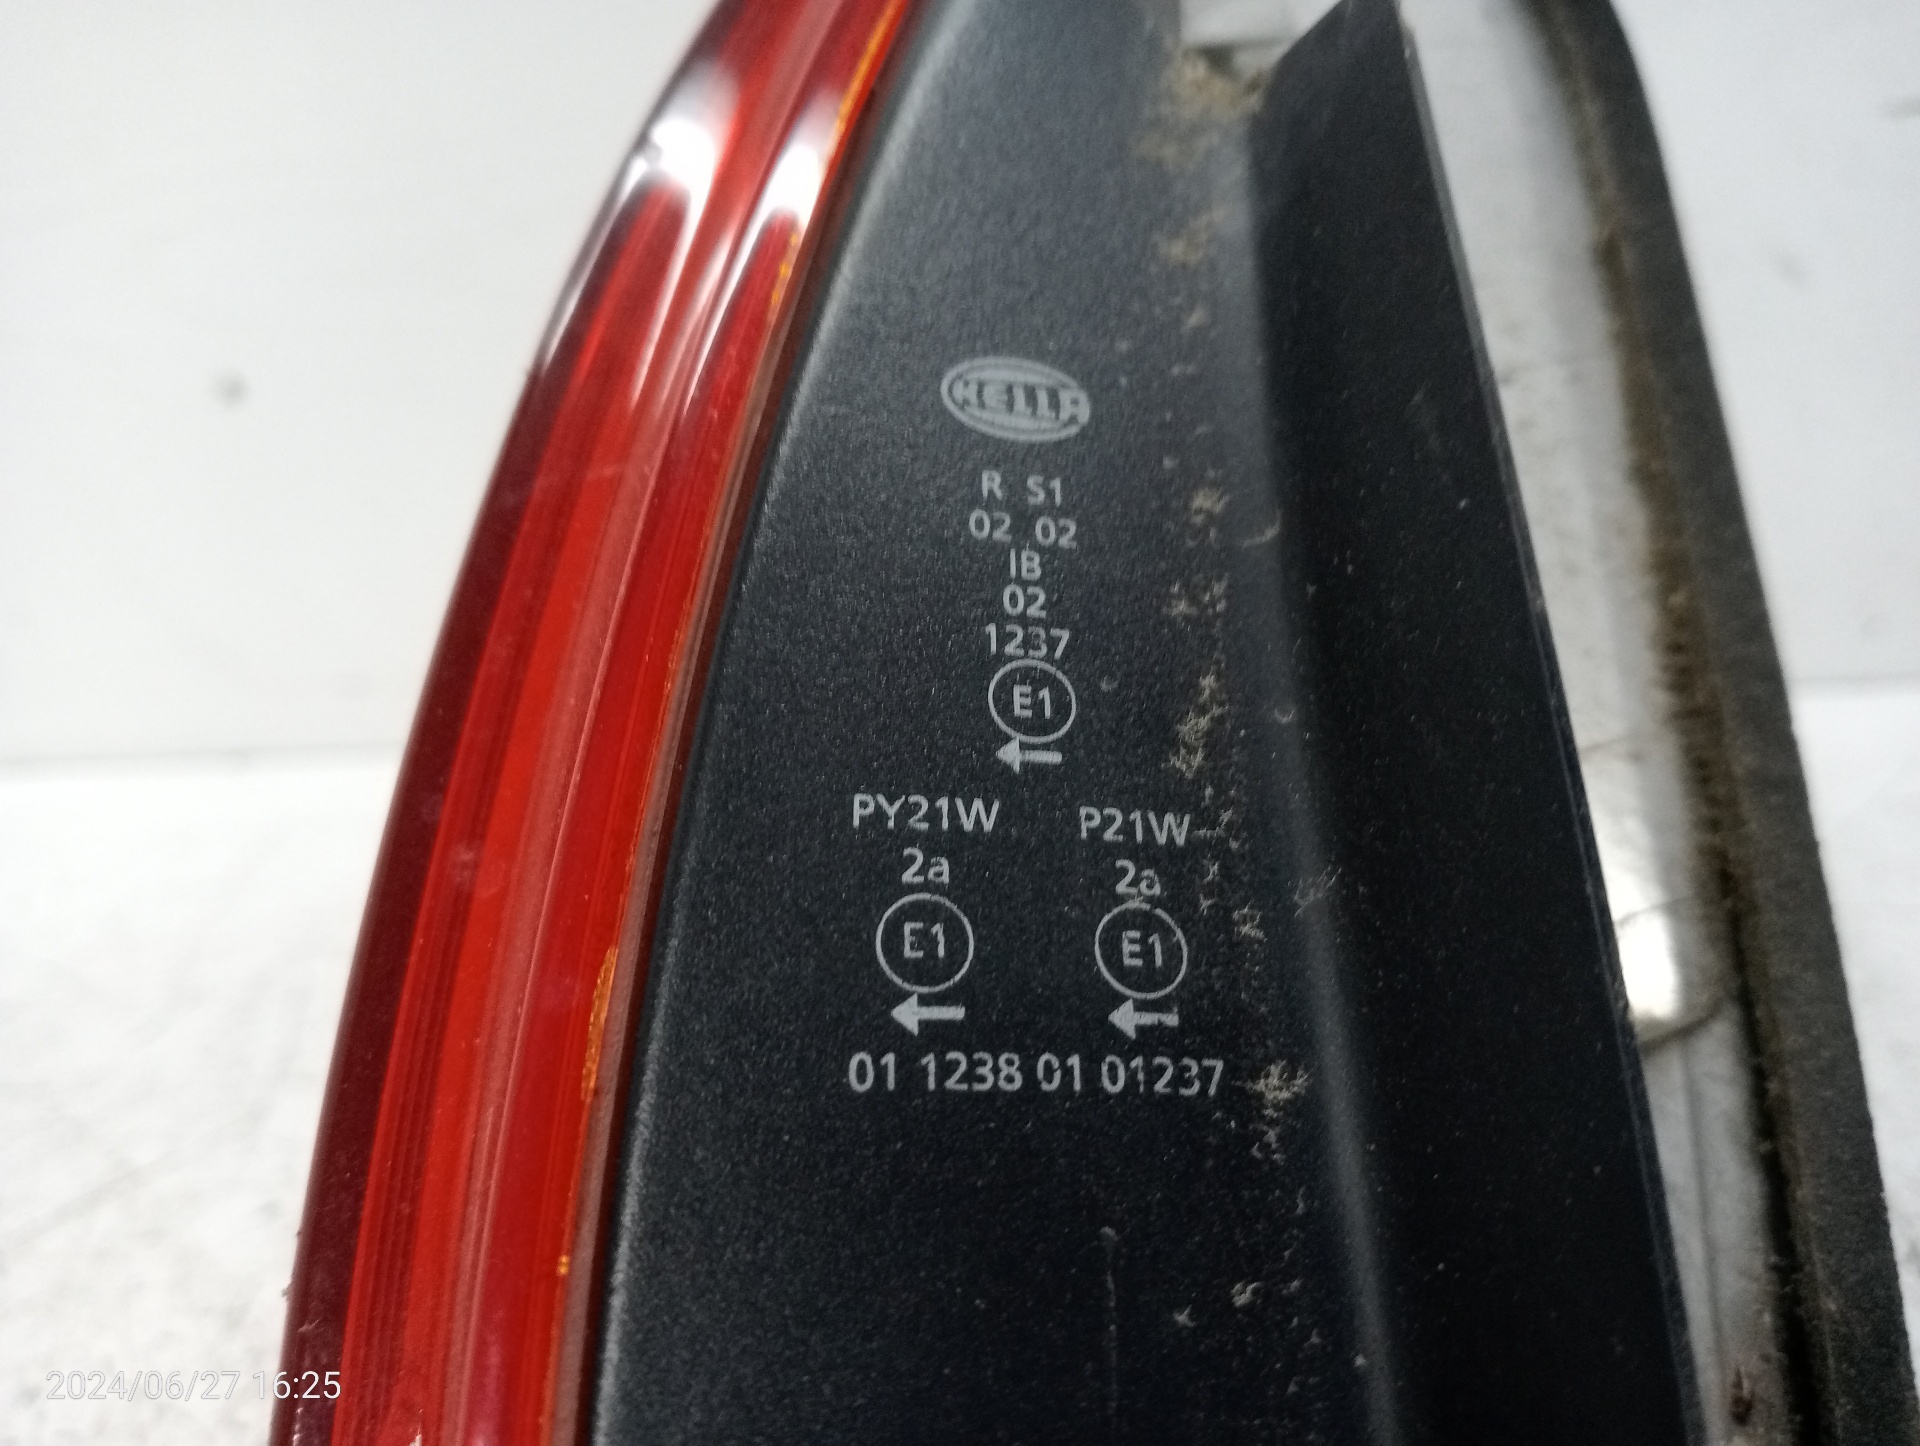 BMW 7 Series E65/E66 (2001-2008) Фонарь задний левый 63217164733 25393185